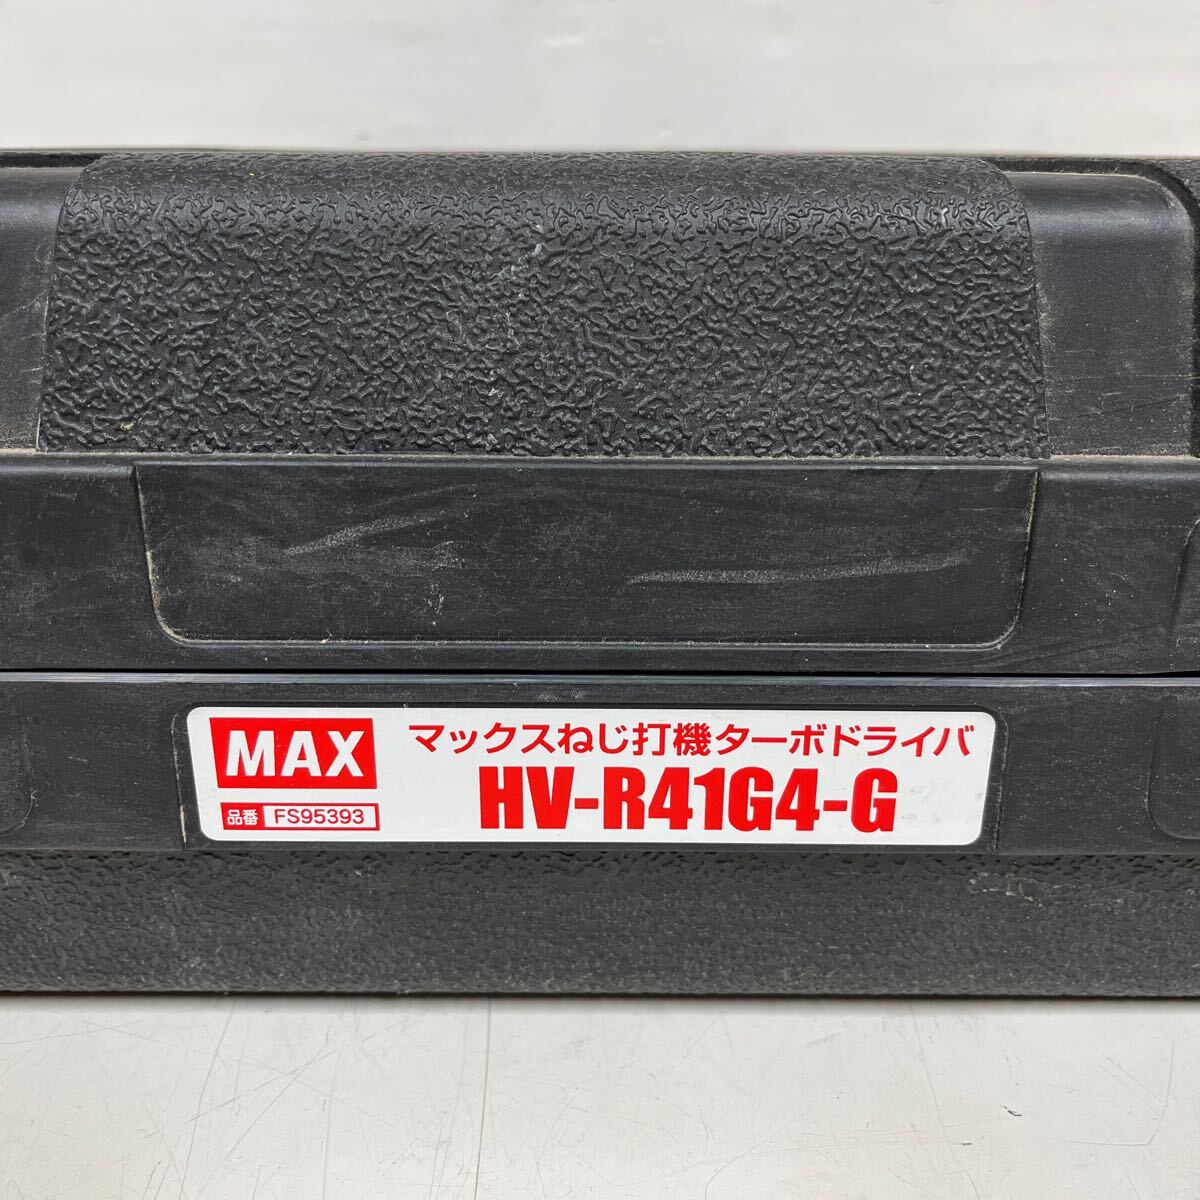 A◯ マックス MAX ターボドライバ HV-R41G4 高圧 ねじ打機 付属品あり_画像9